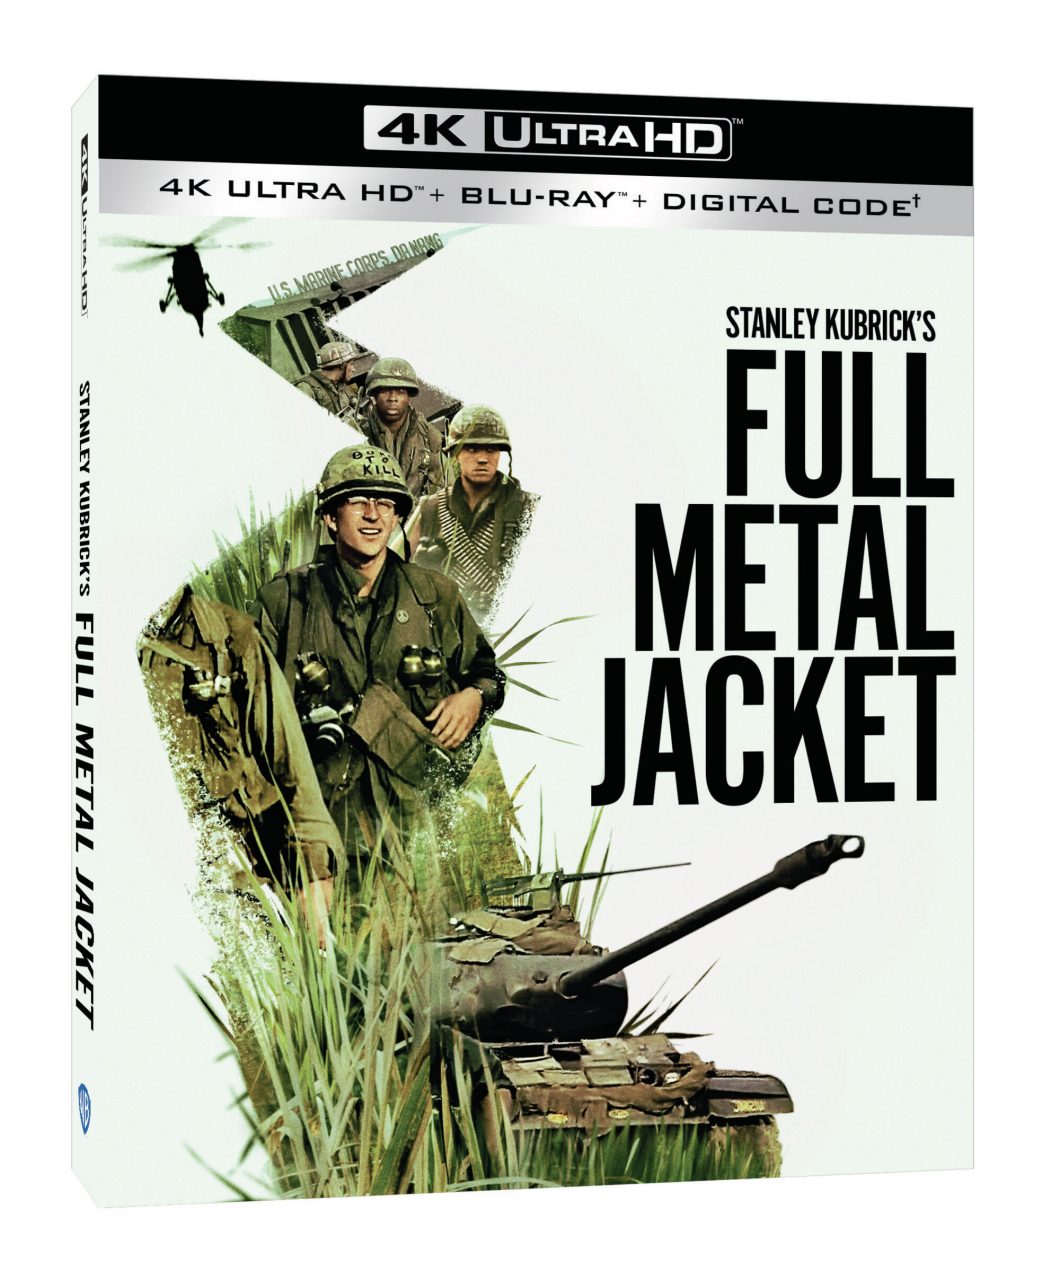 Full Metal Jacket 4K Ultra HD cover (Warner Bros. Home Entertainment)